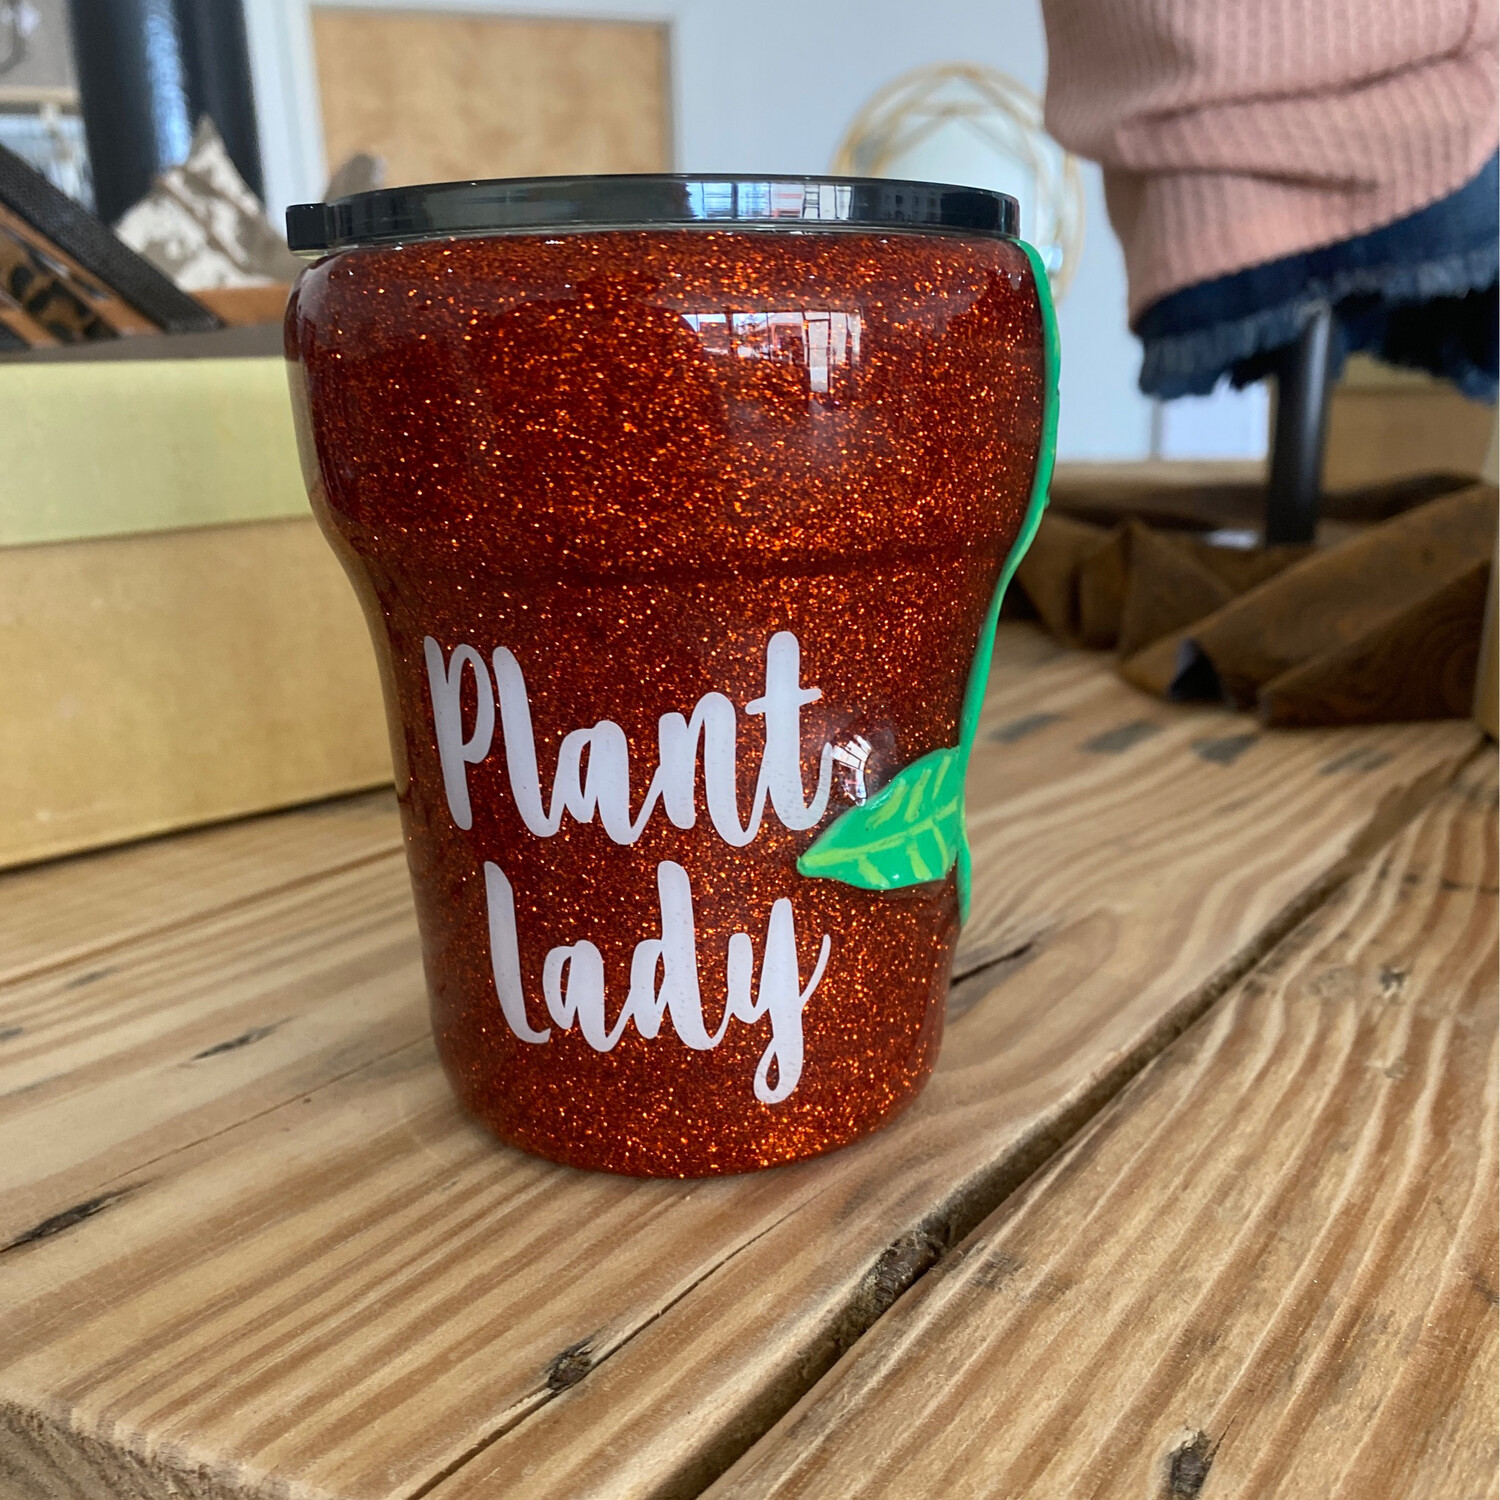 Plant Lady